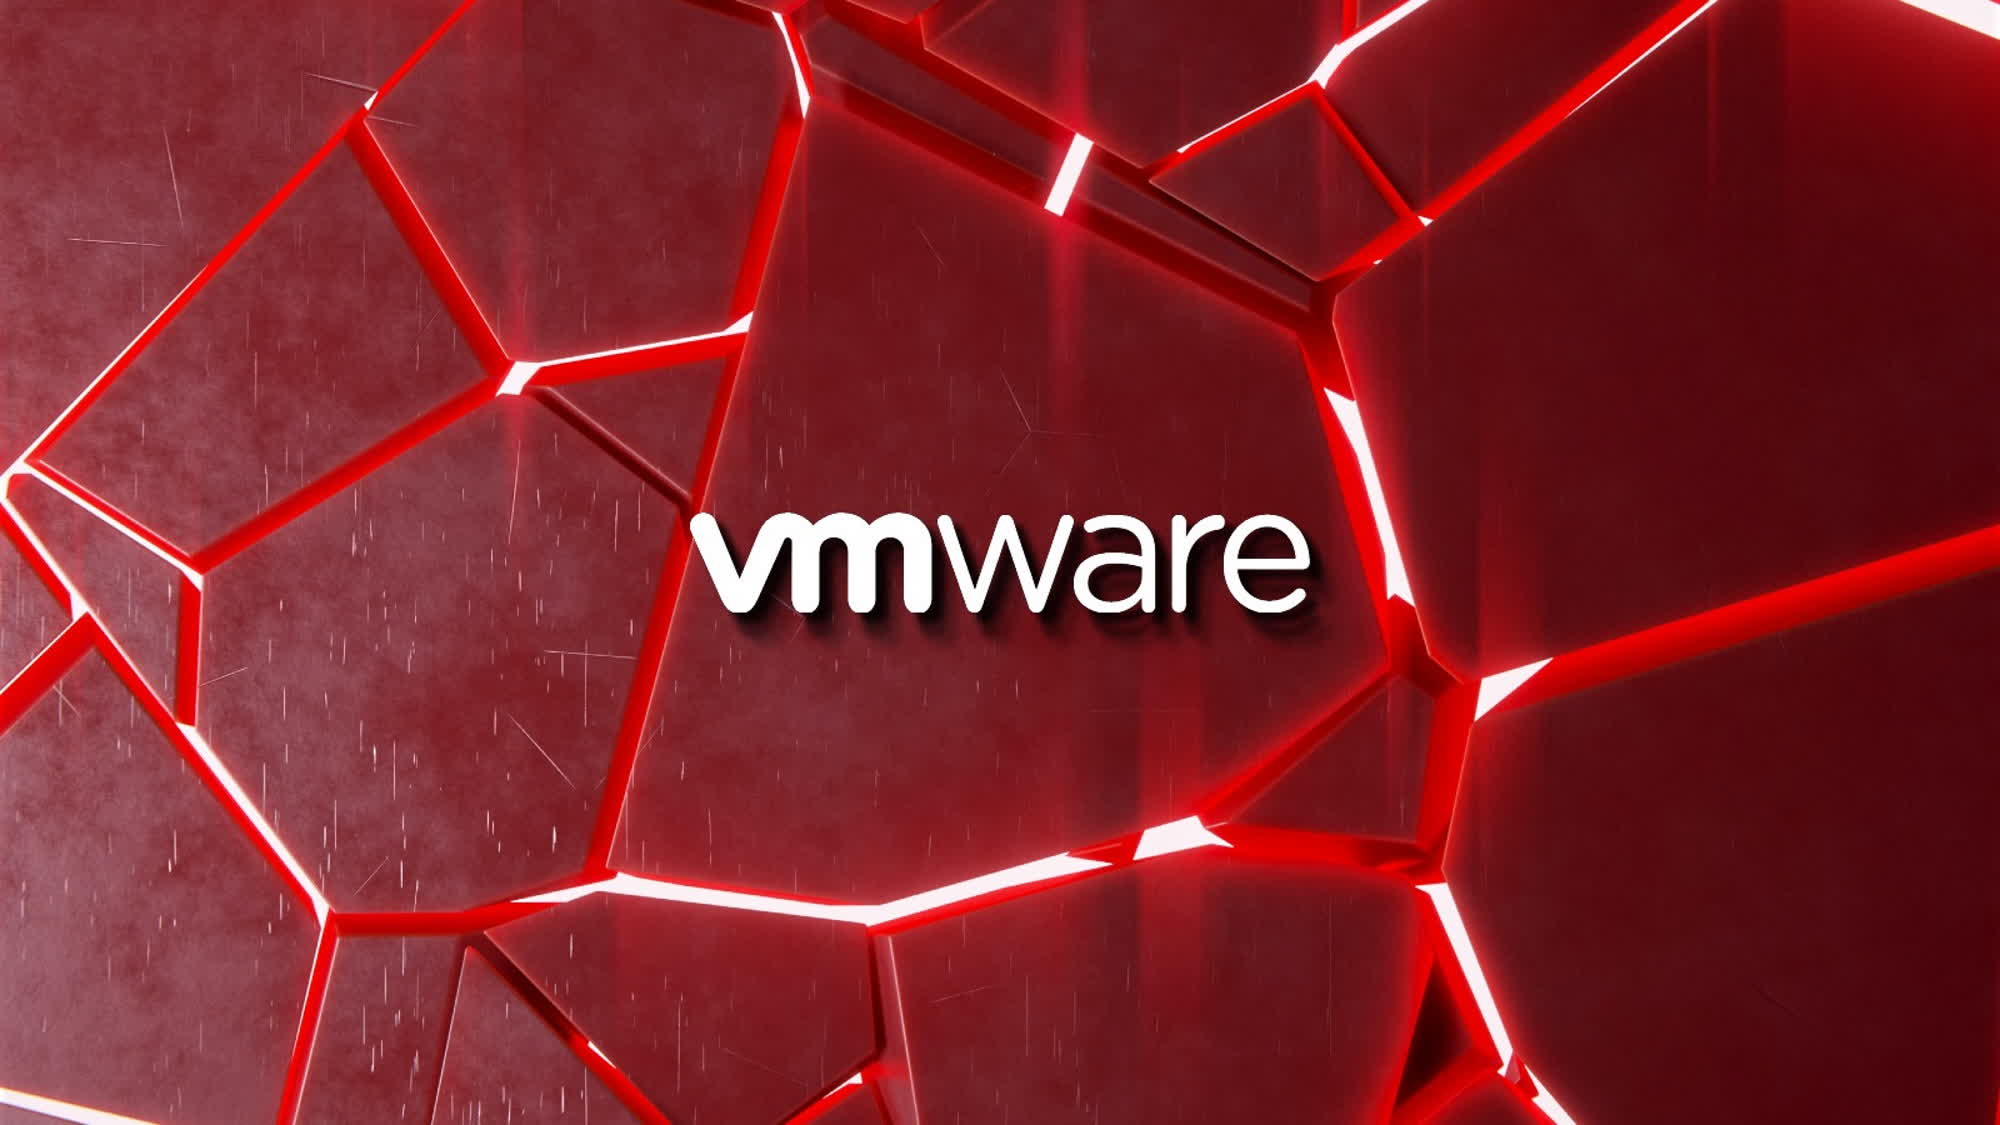 VMware se ve obligada a parchear vulnerabilidades peligrosas en productos descontinuados